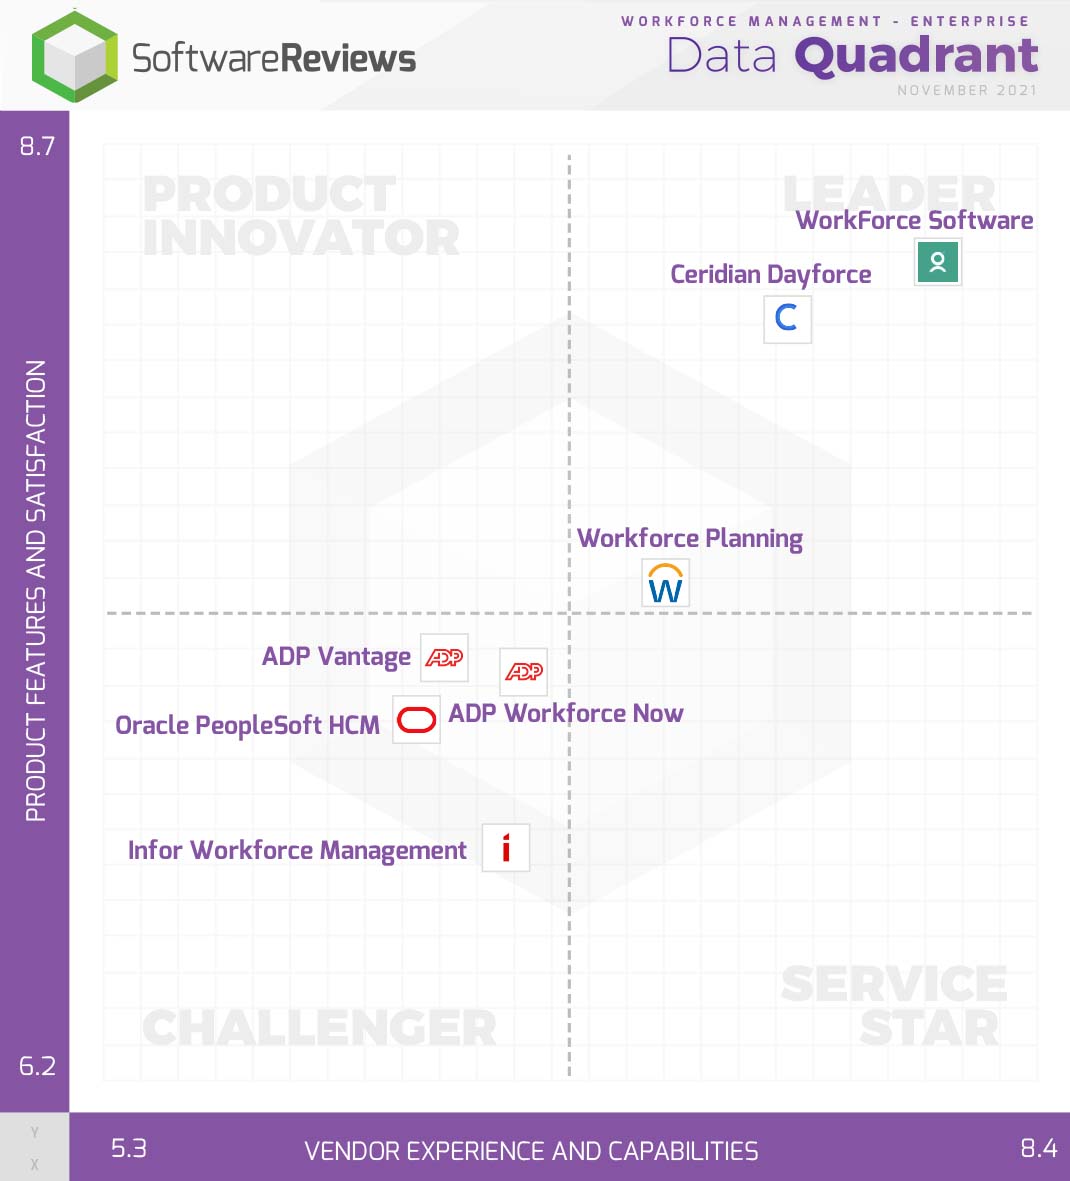 Software Reviews Workforce Software - Enterprise Data Quadrant